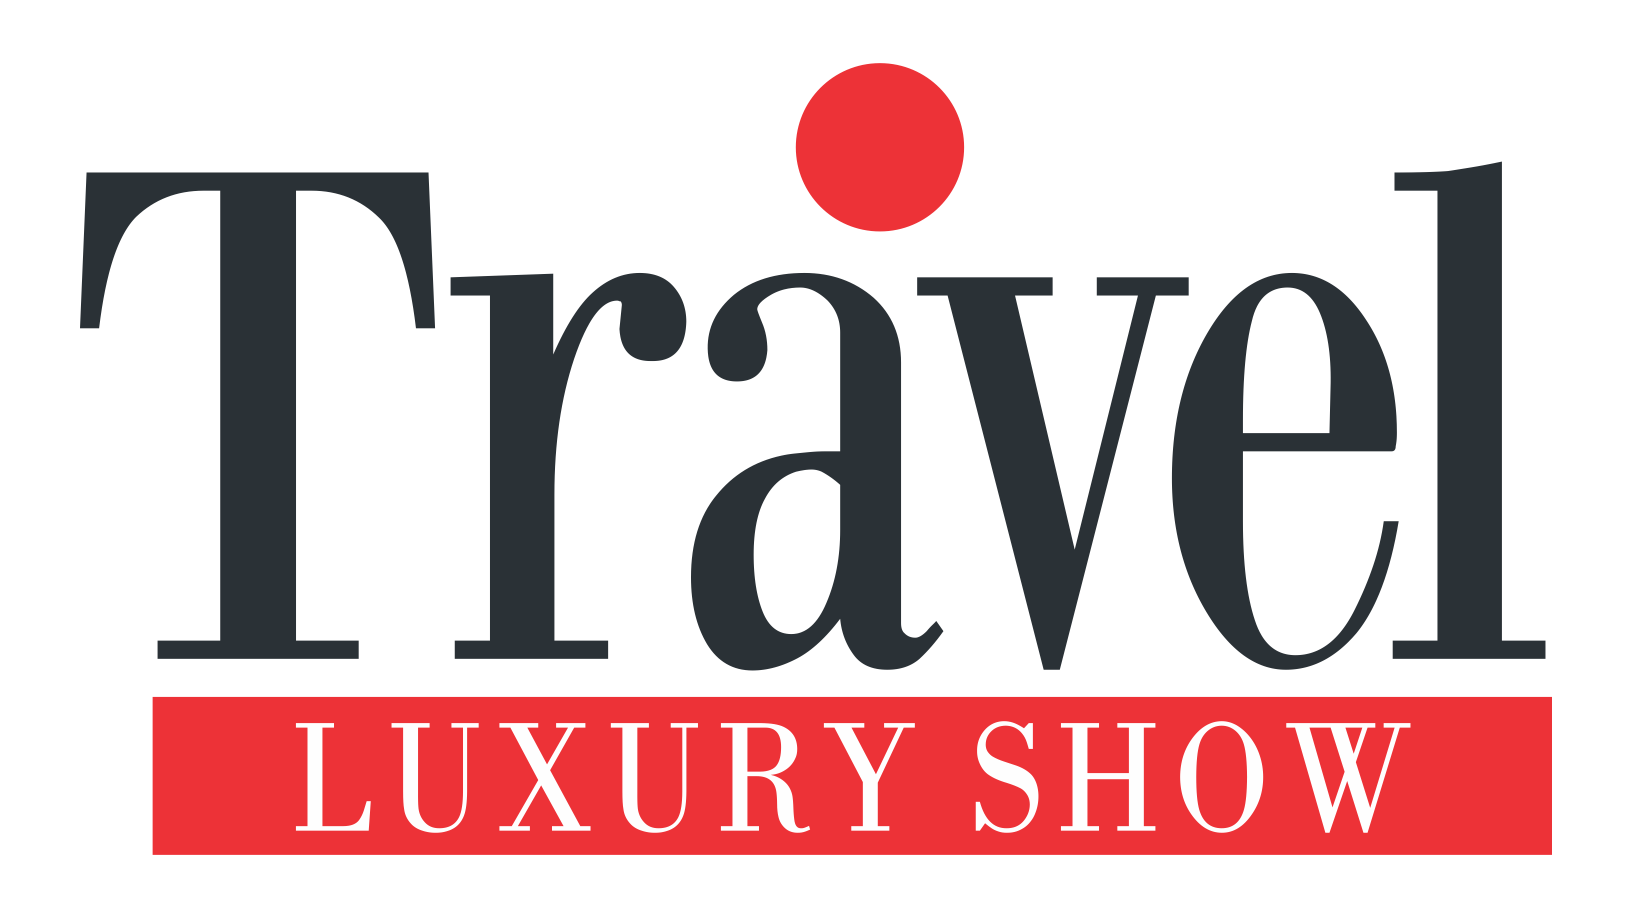 luxury travel companies usa